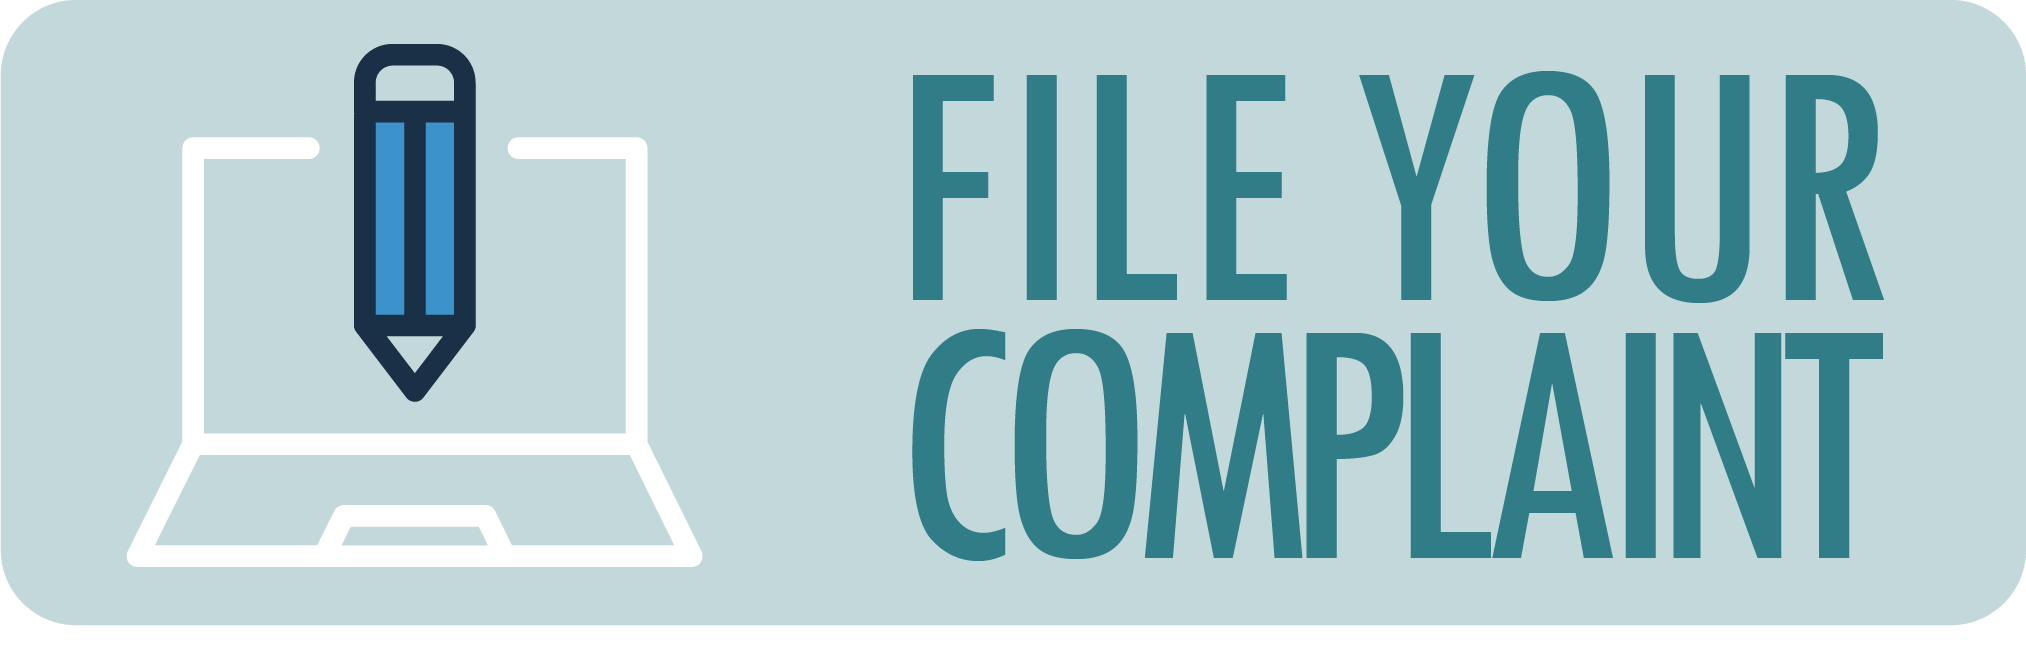 File your complaint